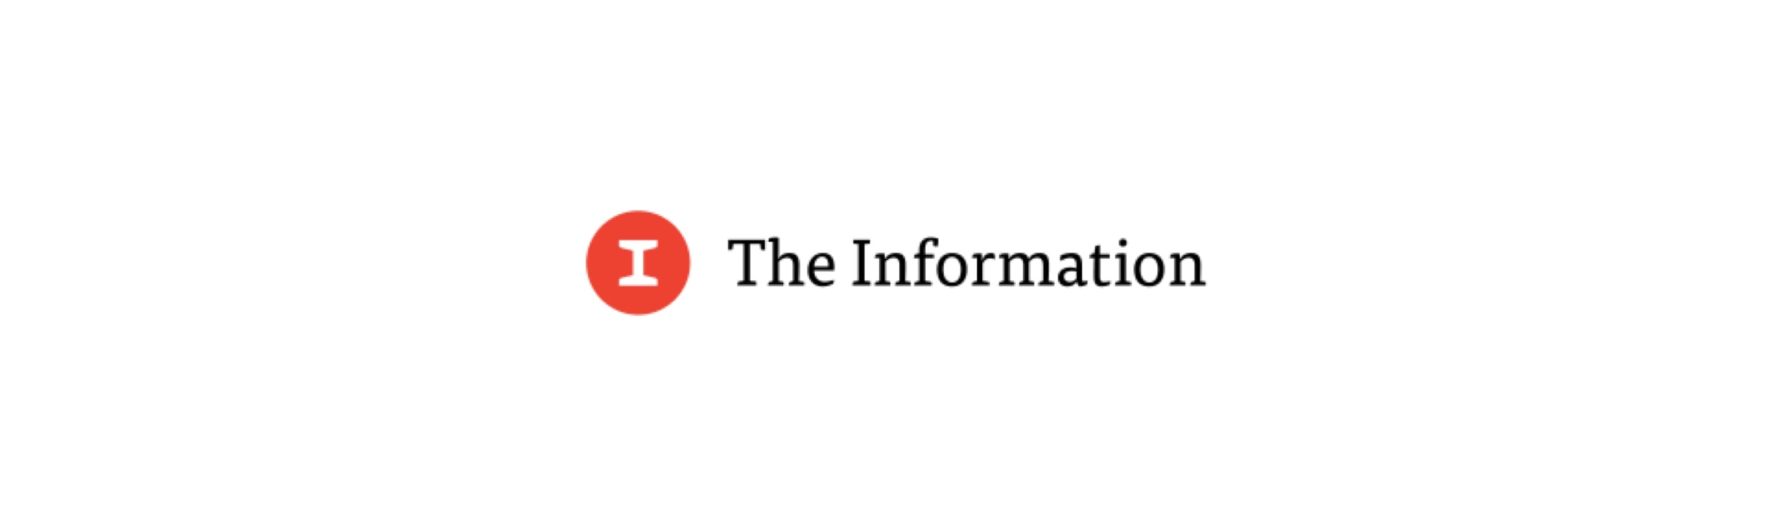  The Information logo